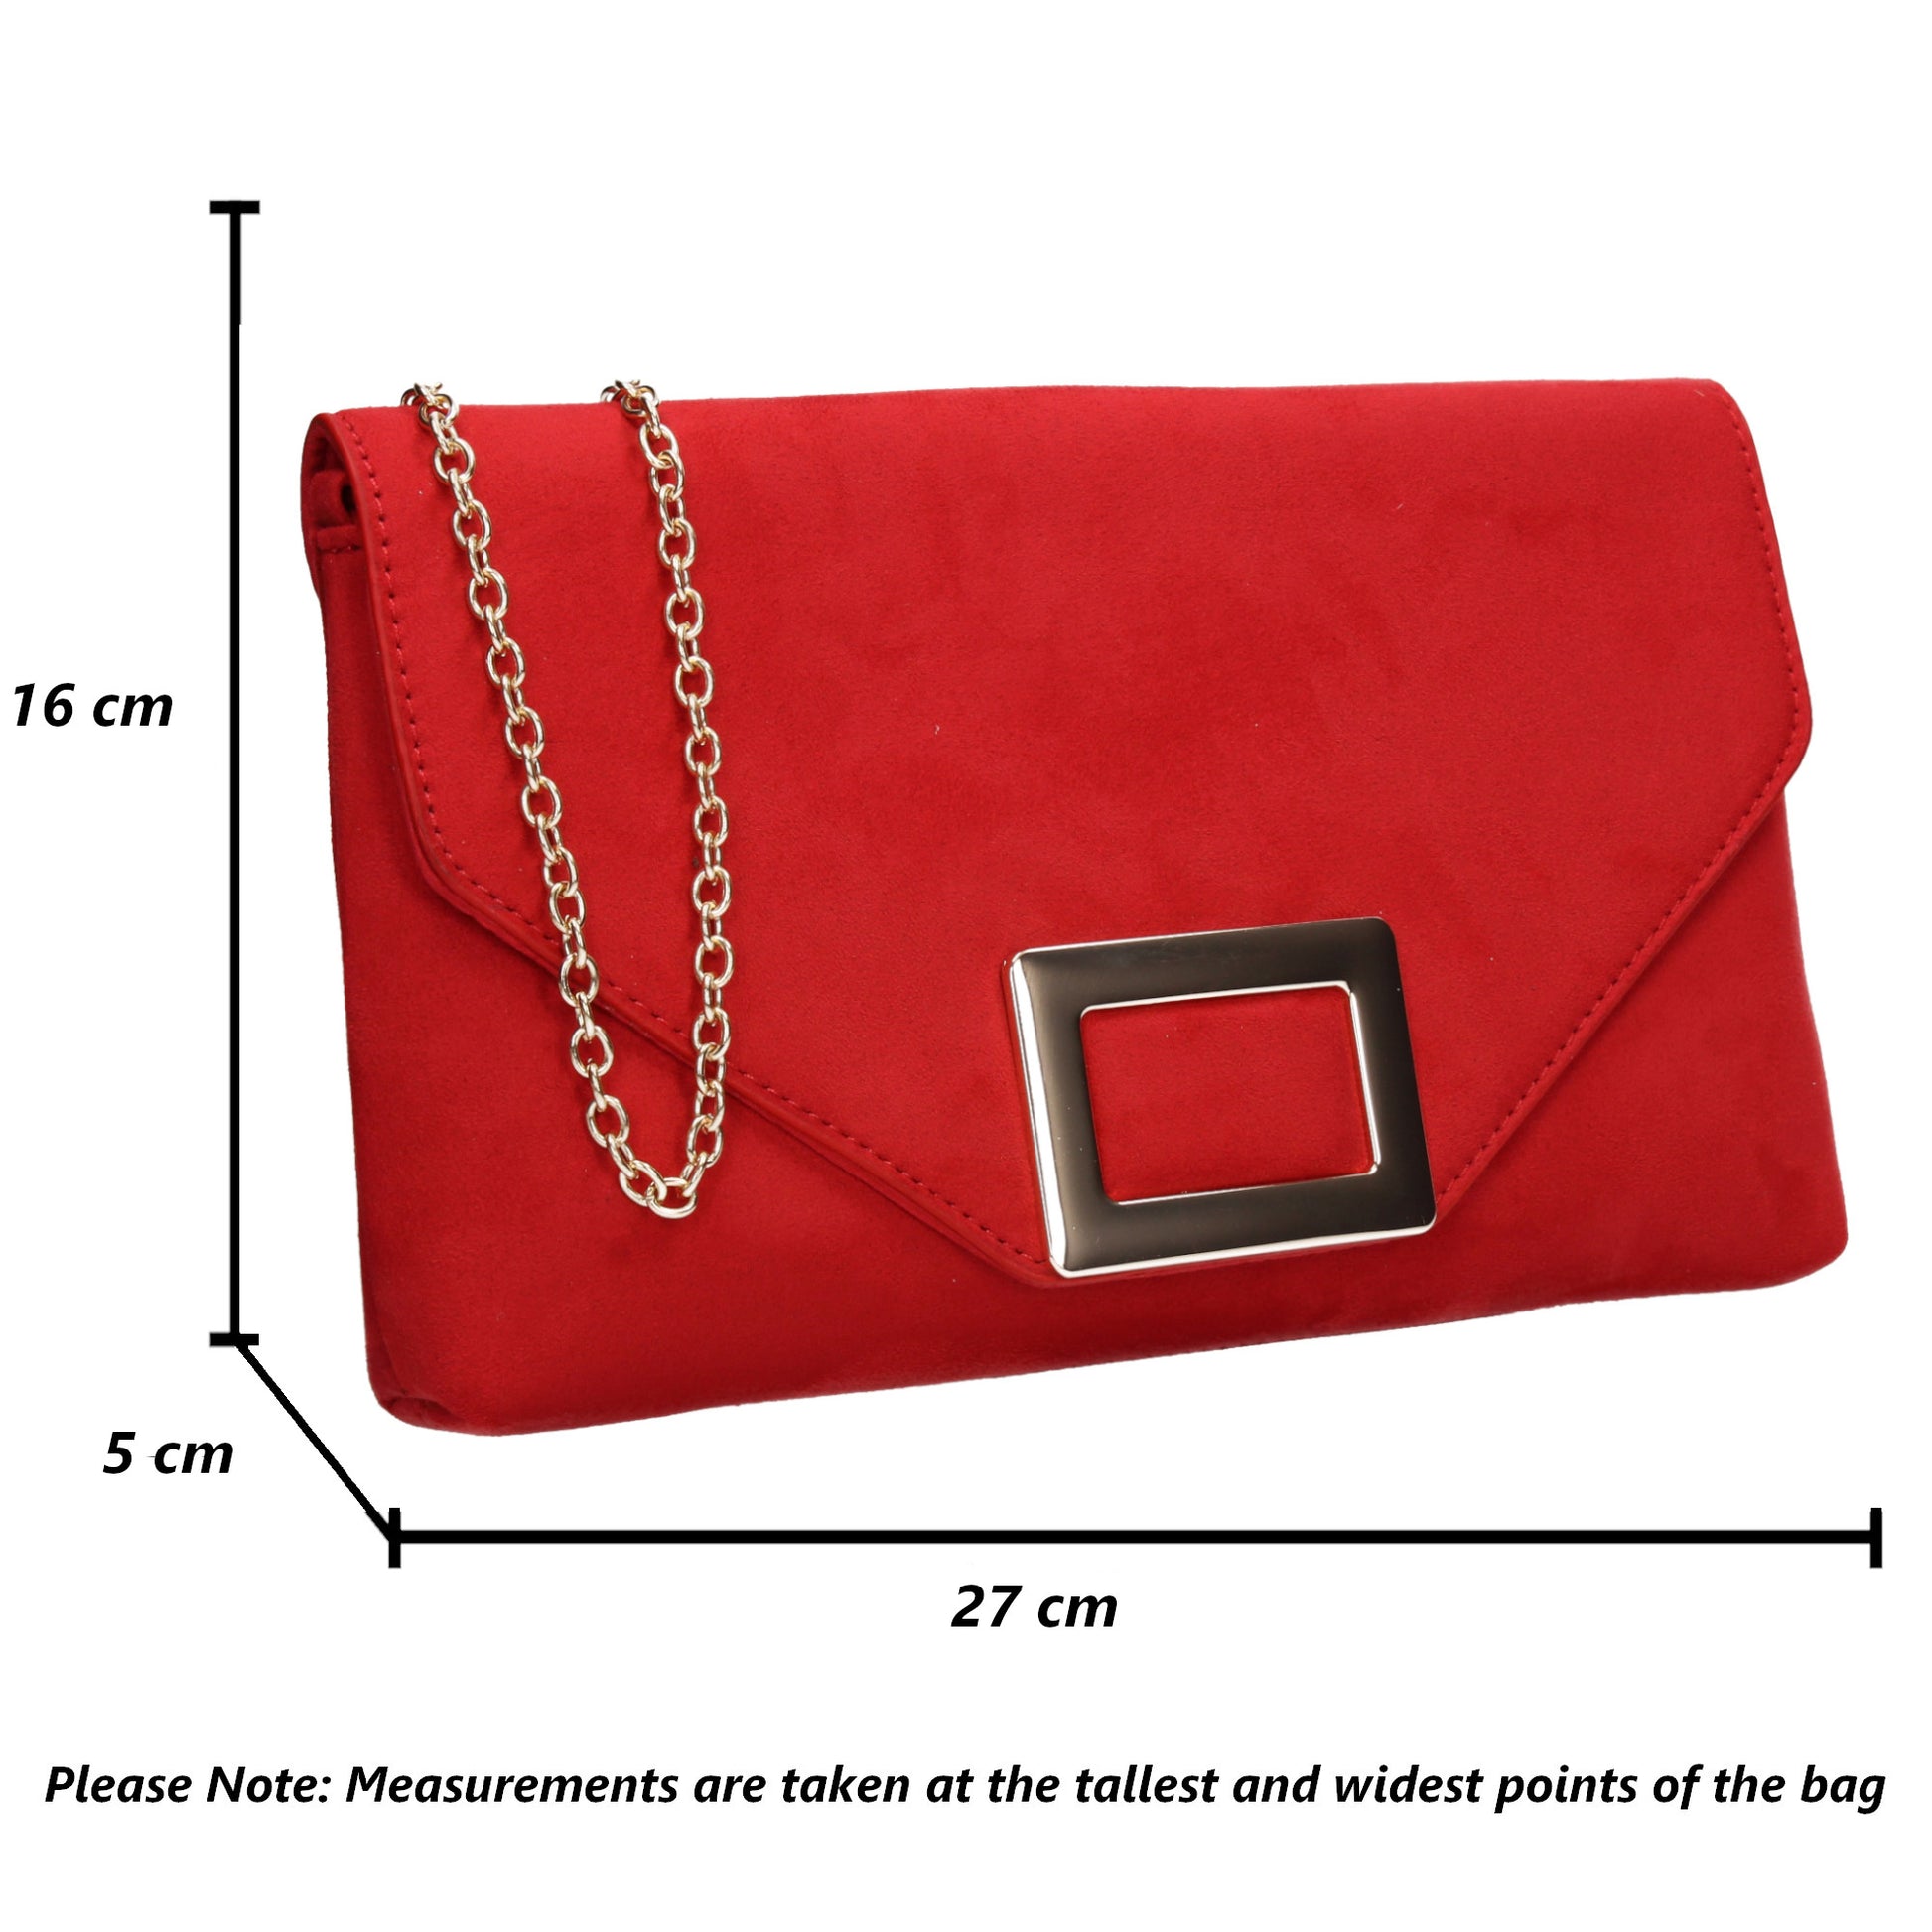 SWANKYSWANS Georgia Clutch Bag Red Cute Cheap Clutch Bag For Weddings School and Work